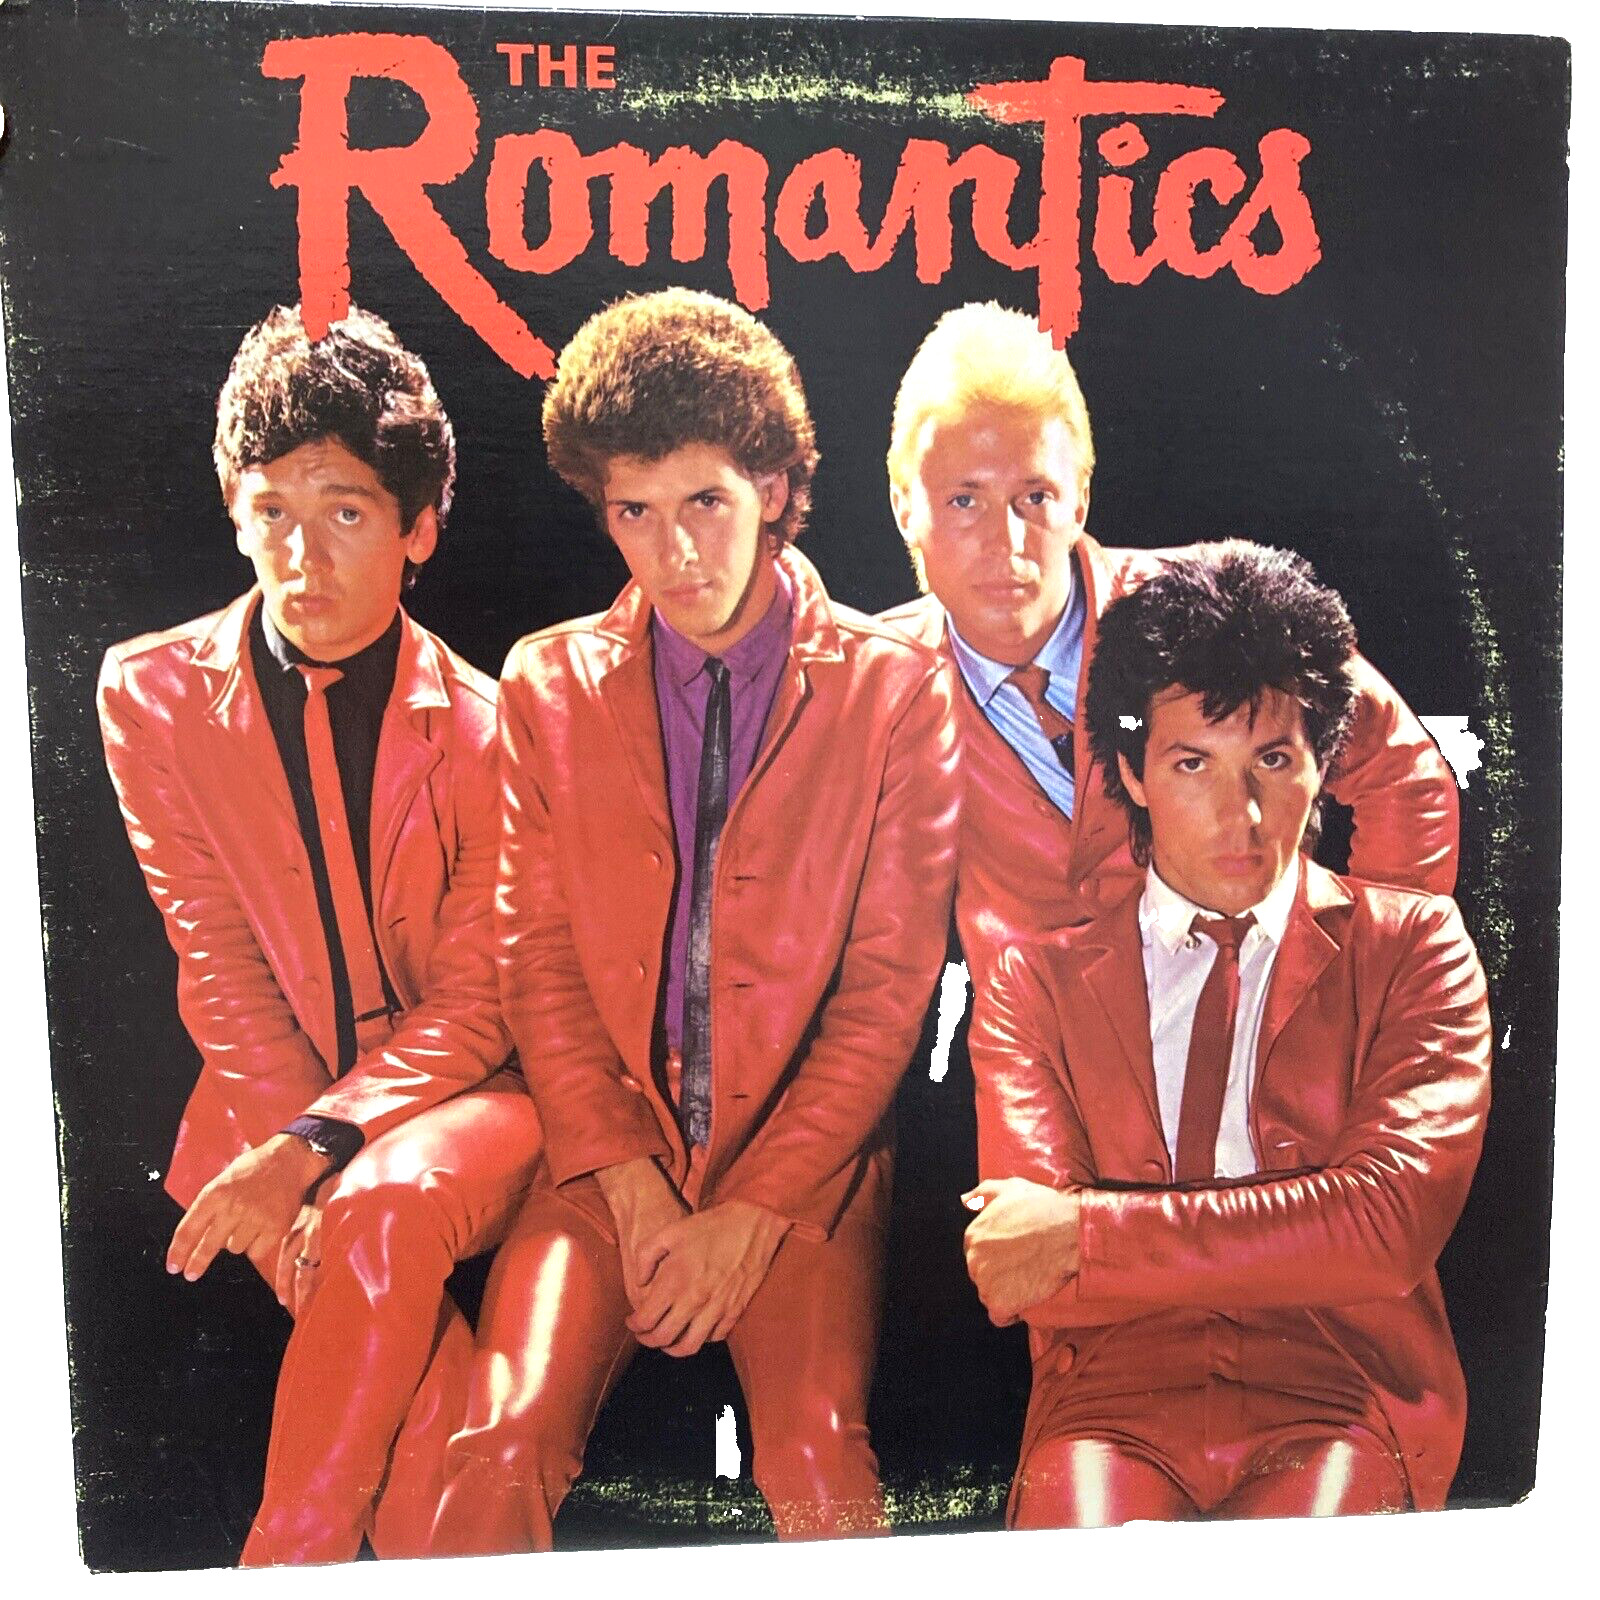 THE ROMANTICS 1980: Self Titled LP Vinyl Nemperor Record Album San JZ 36273